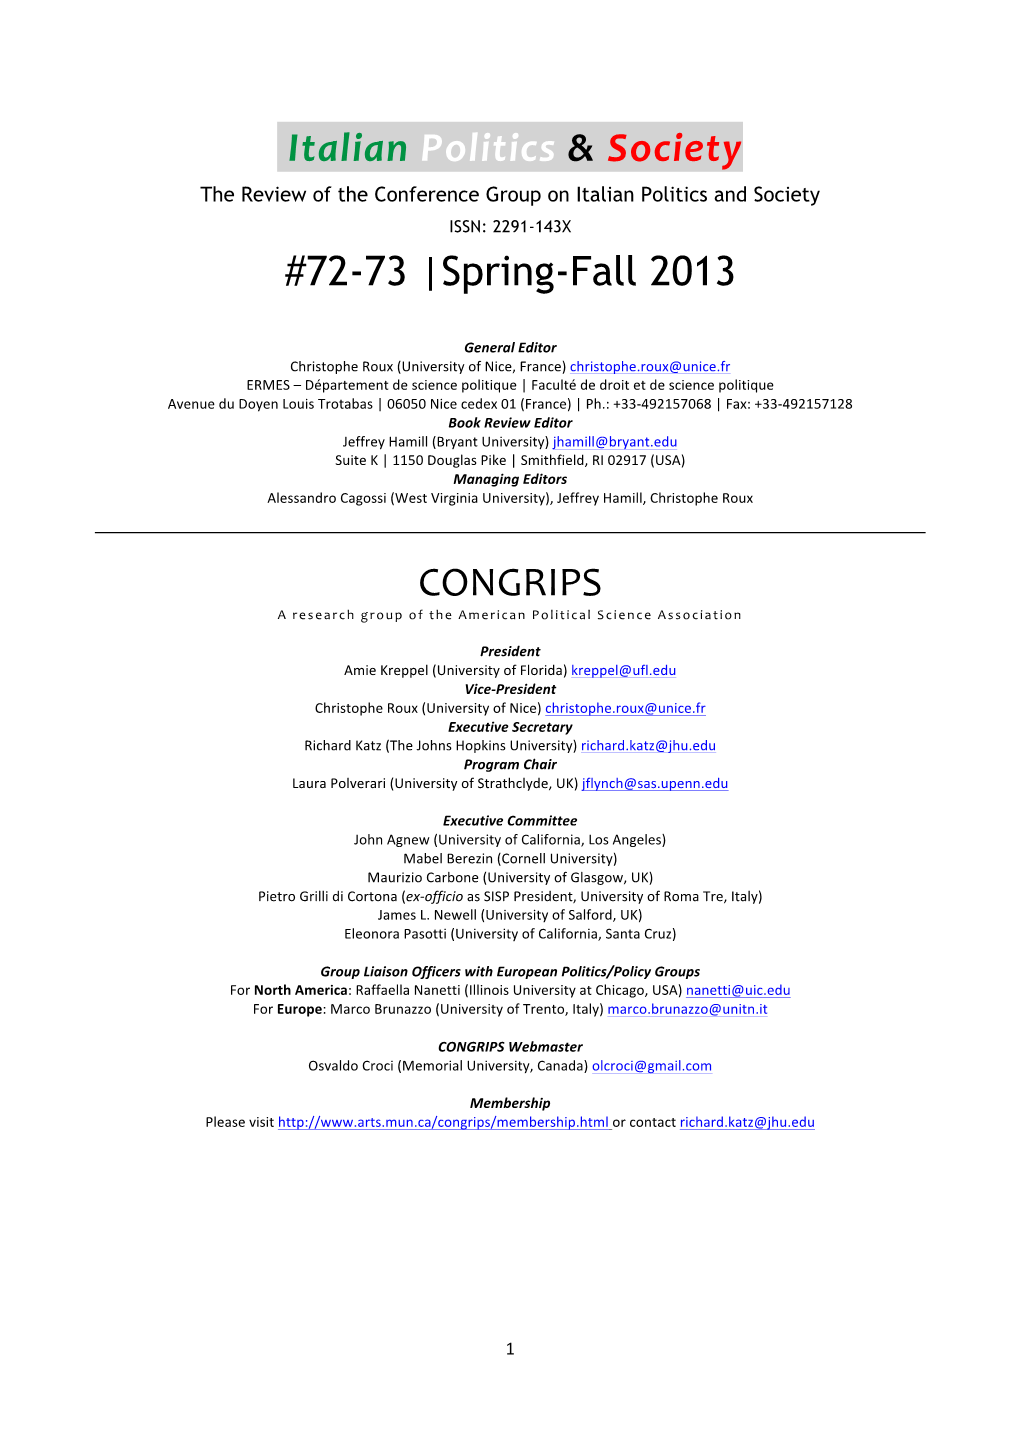 Italian Politics & Society #72-73 |Spring-Fall 2013 CONGRIPS